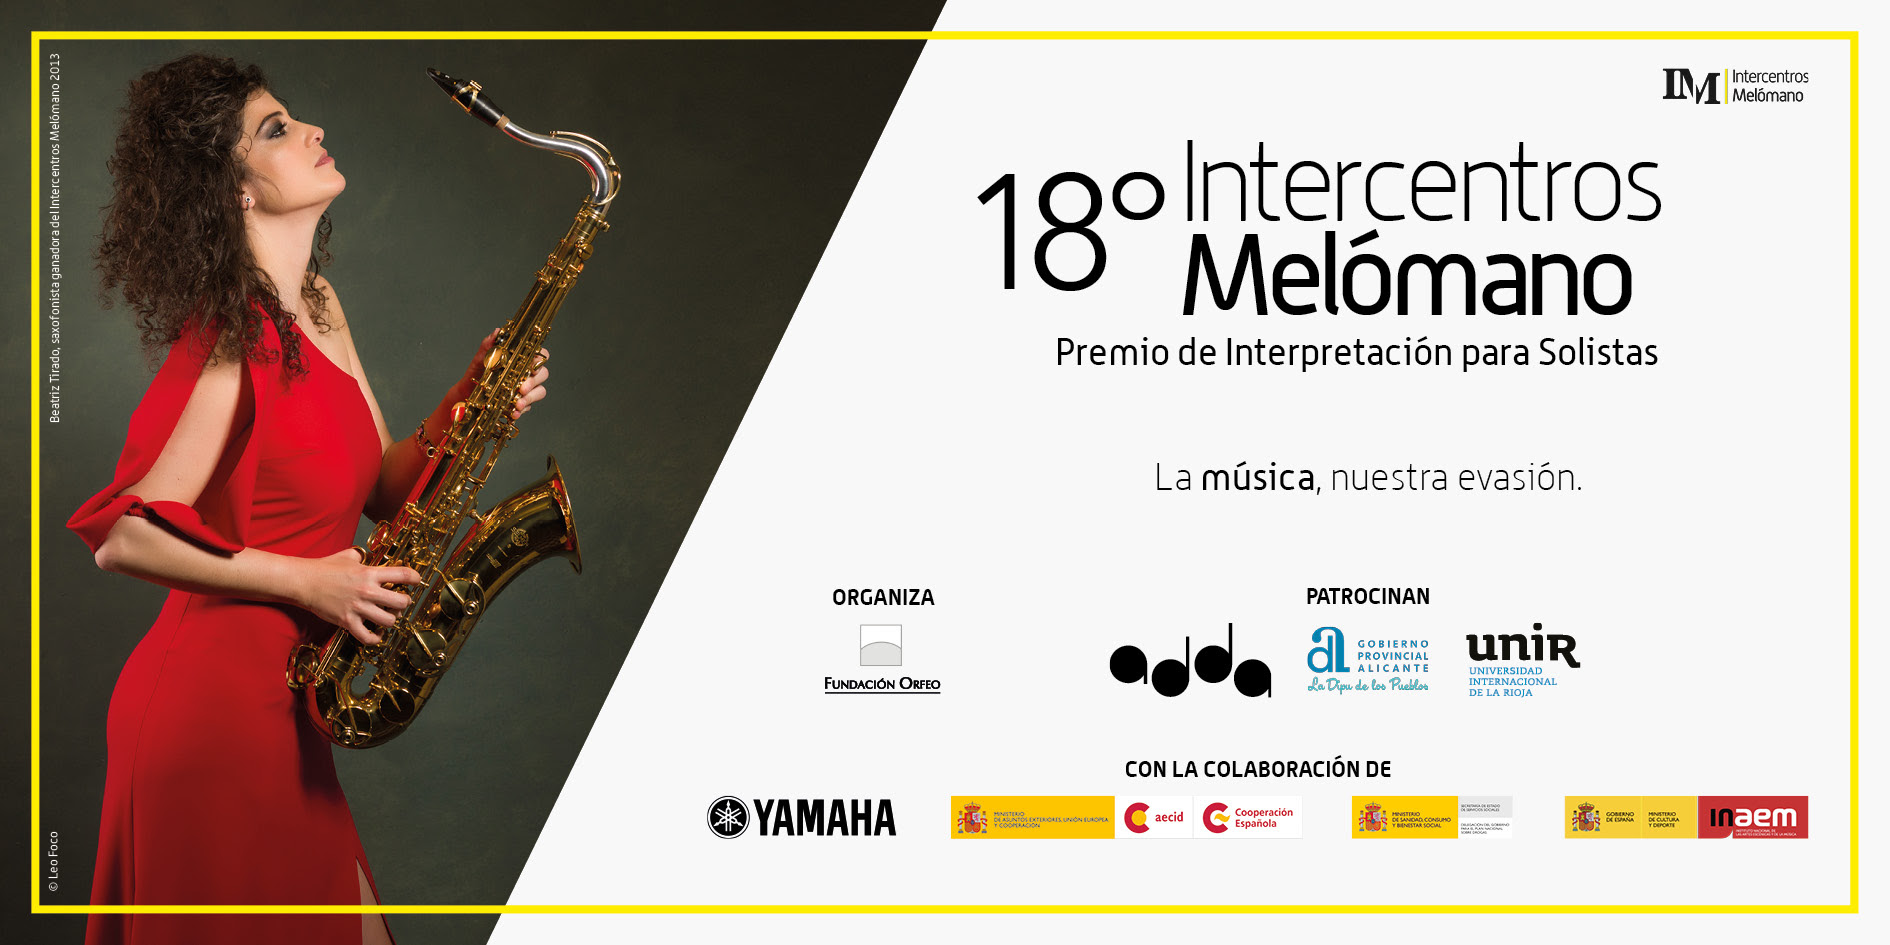 Imagen Intercentros Melómano 2019